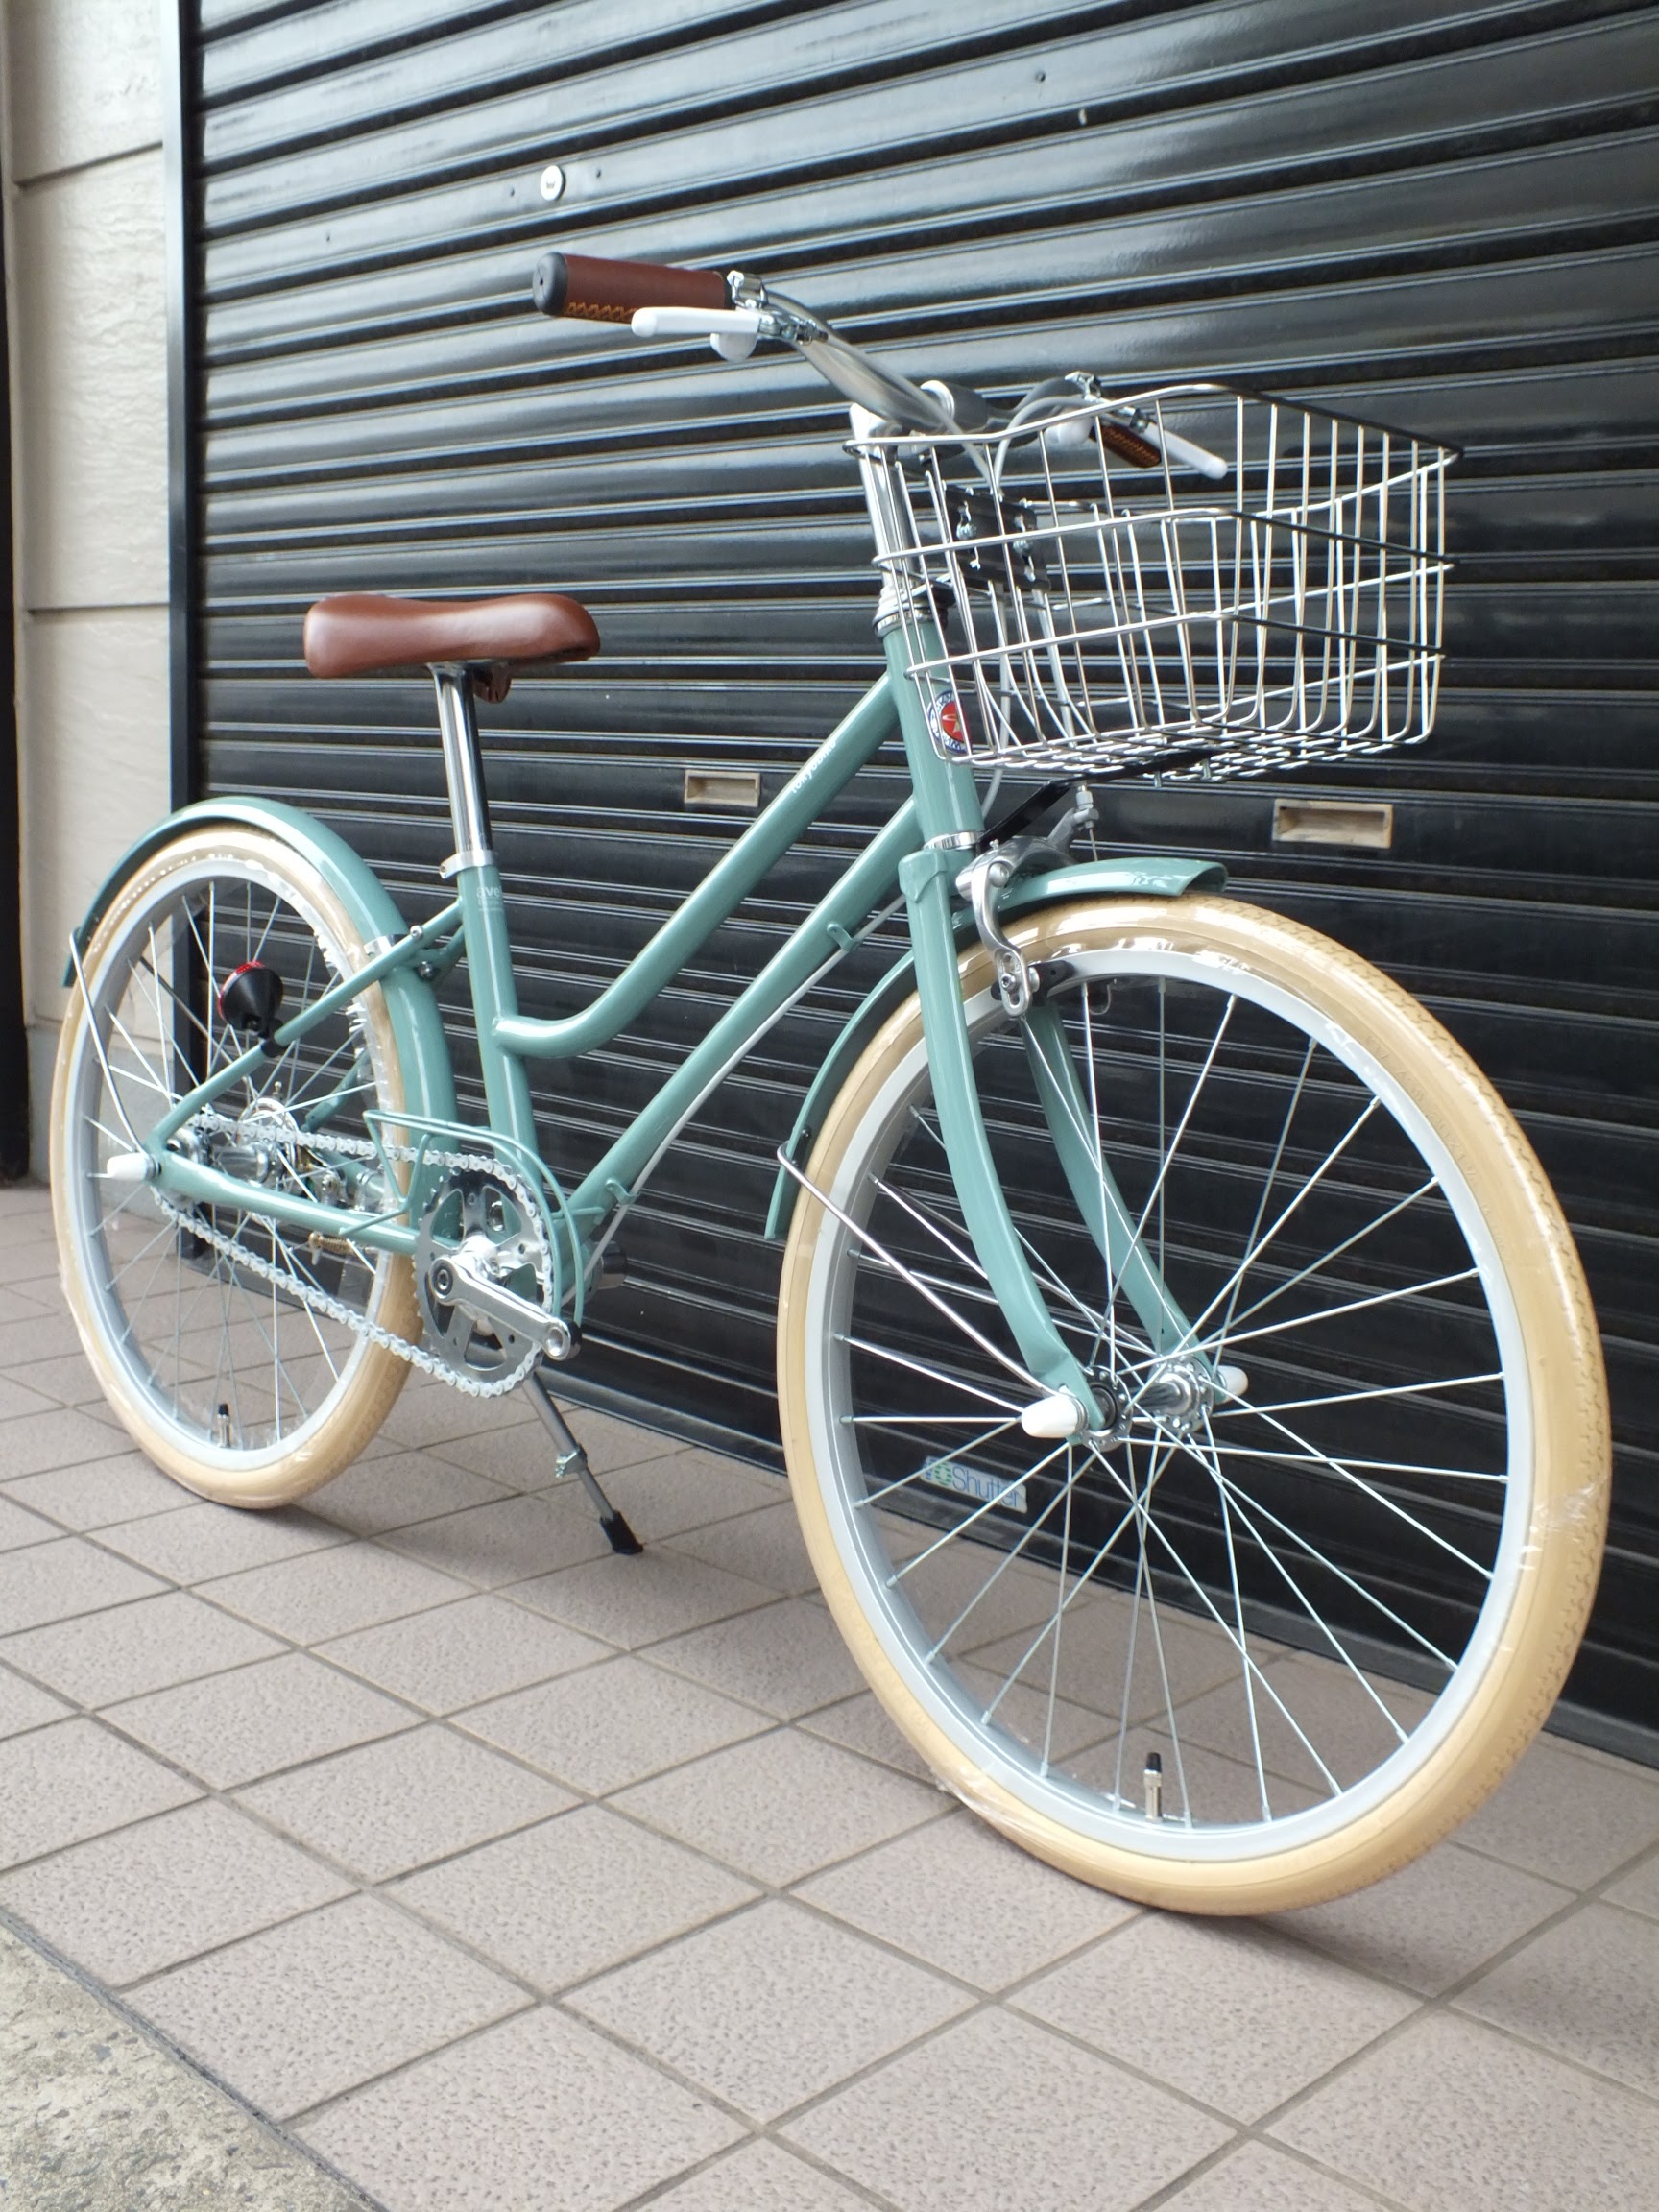 avelo Bicycle shop | アヴェロ バイシクル ショップ 浦和: TOKYOBIKE ...